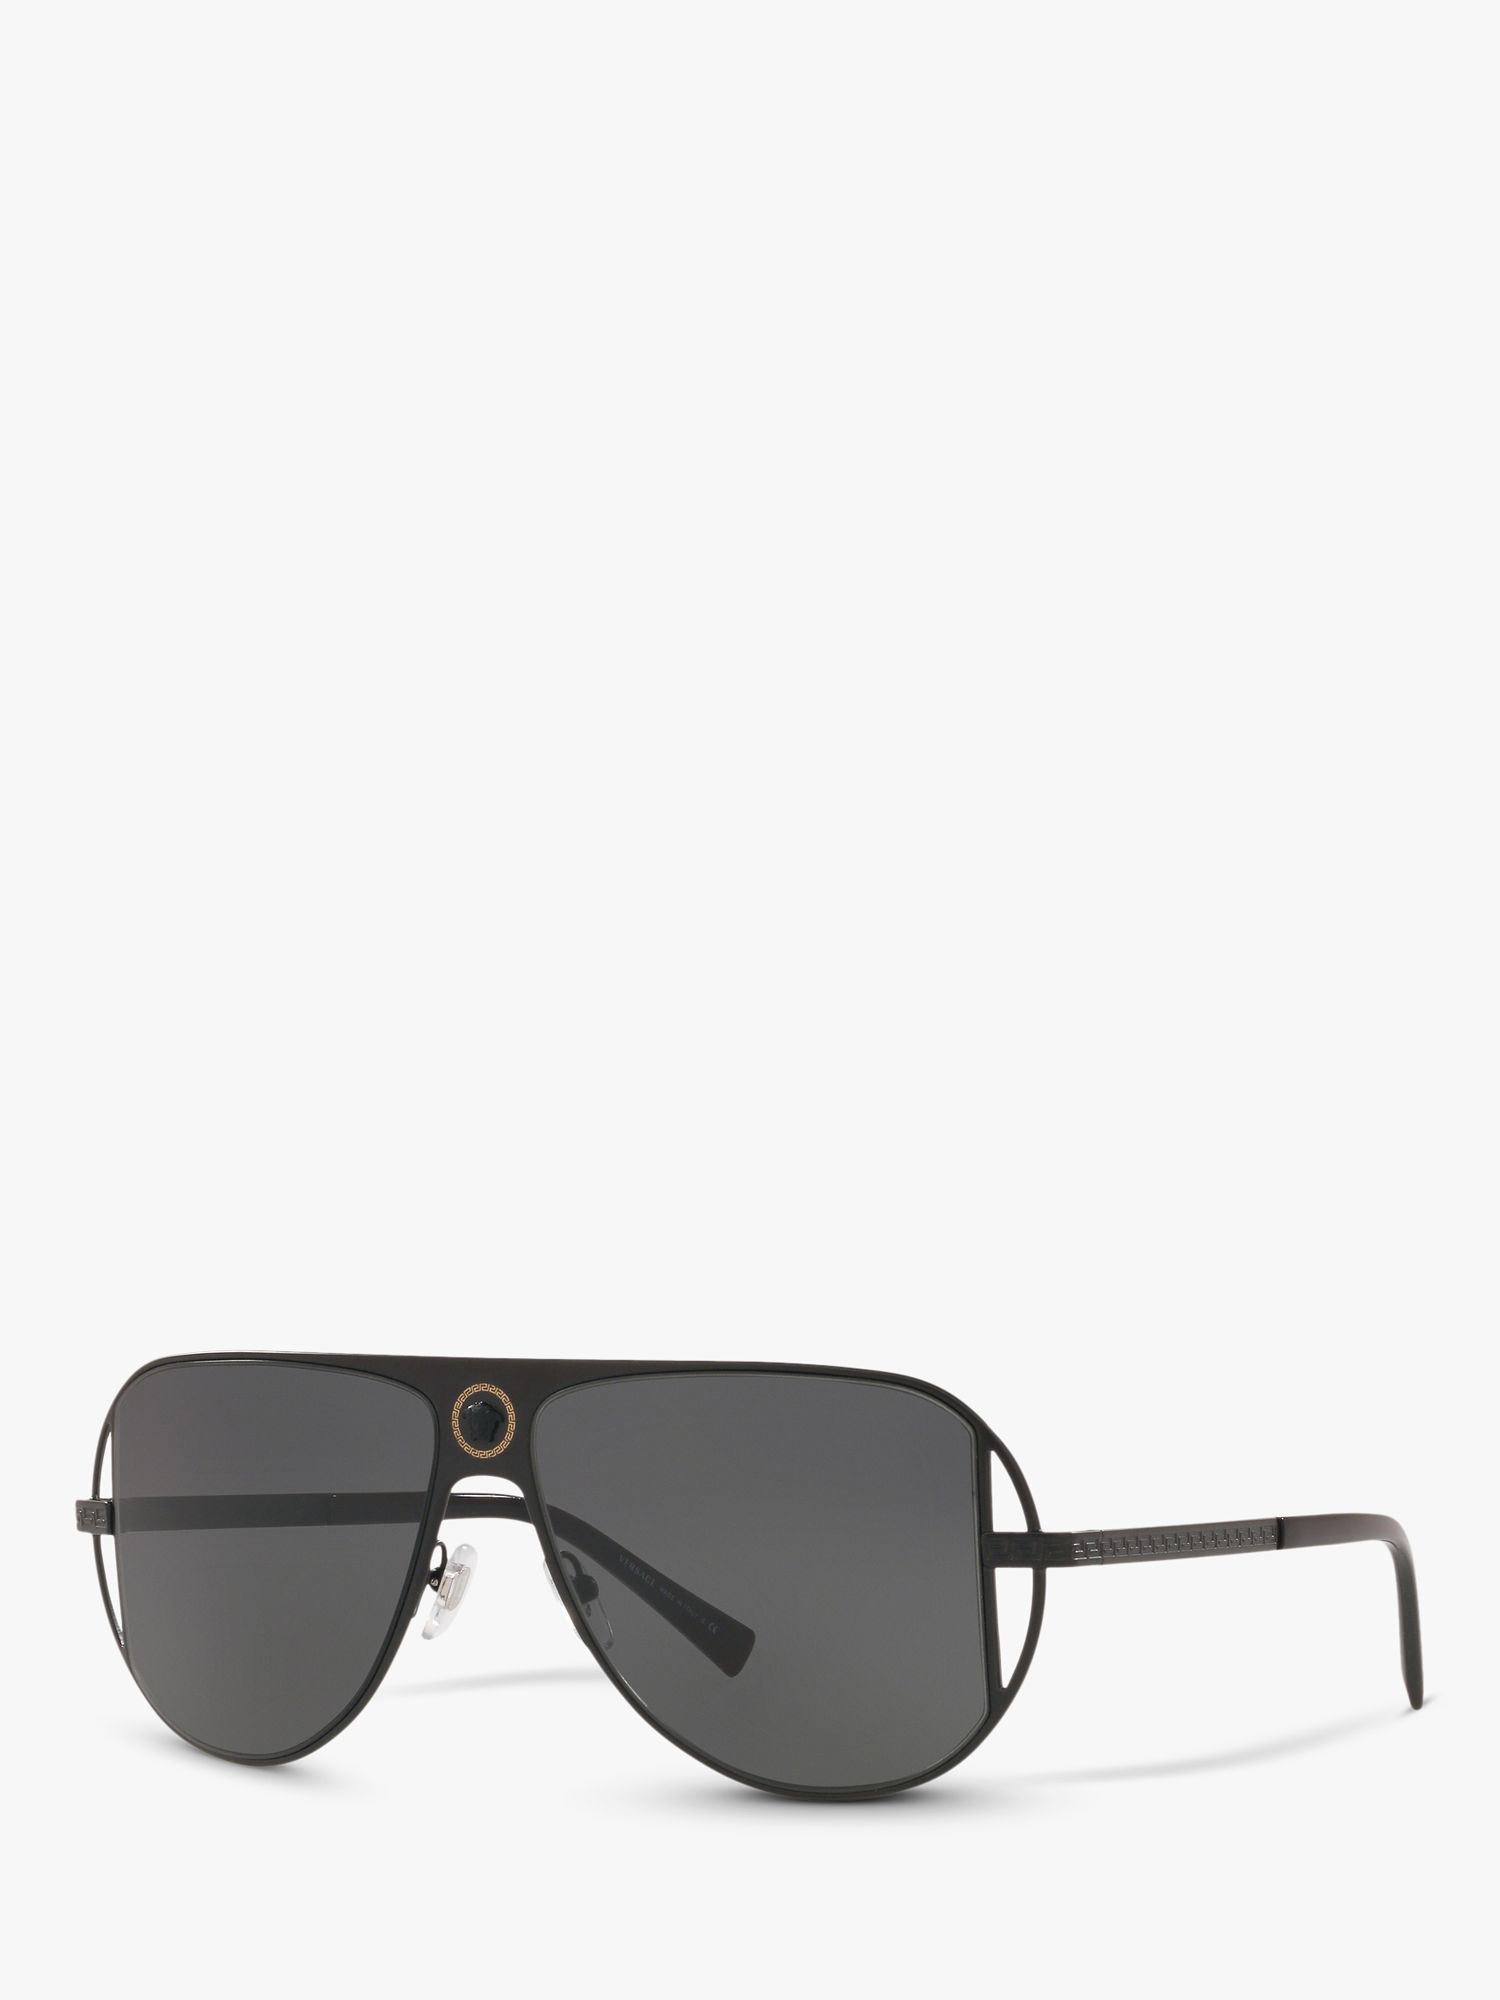 Versace VE2212 Men's Aviator Sunglasses, Black